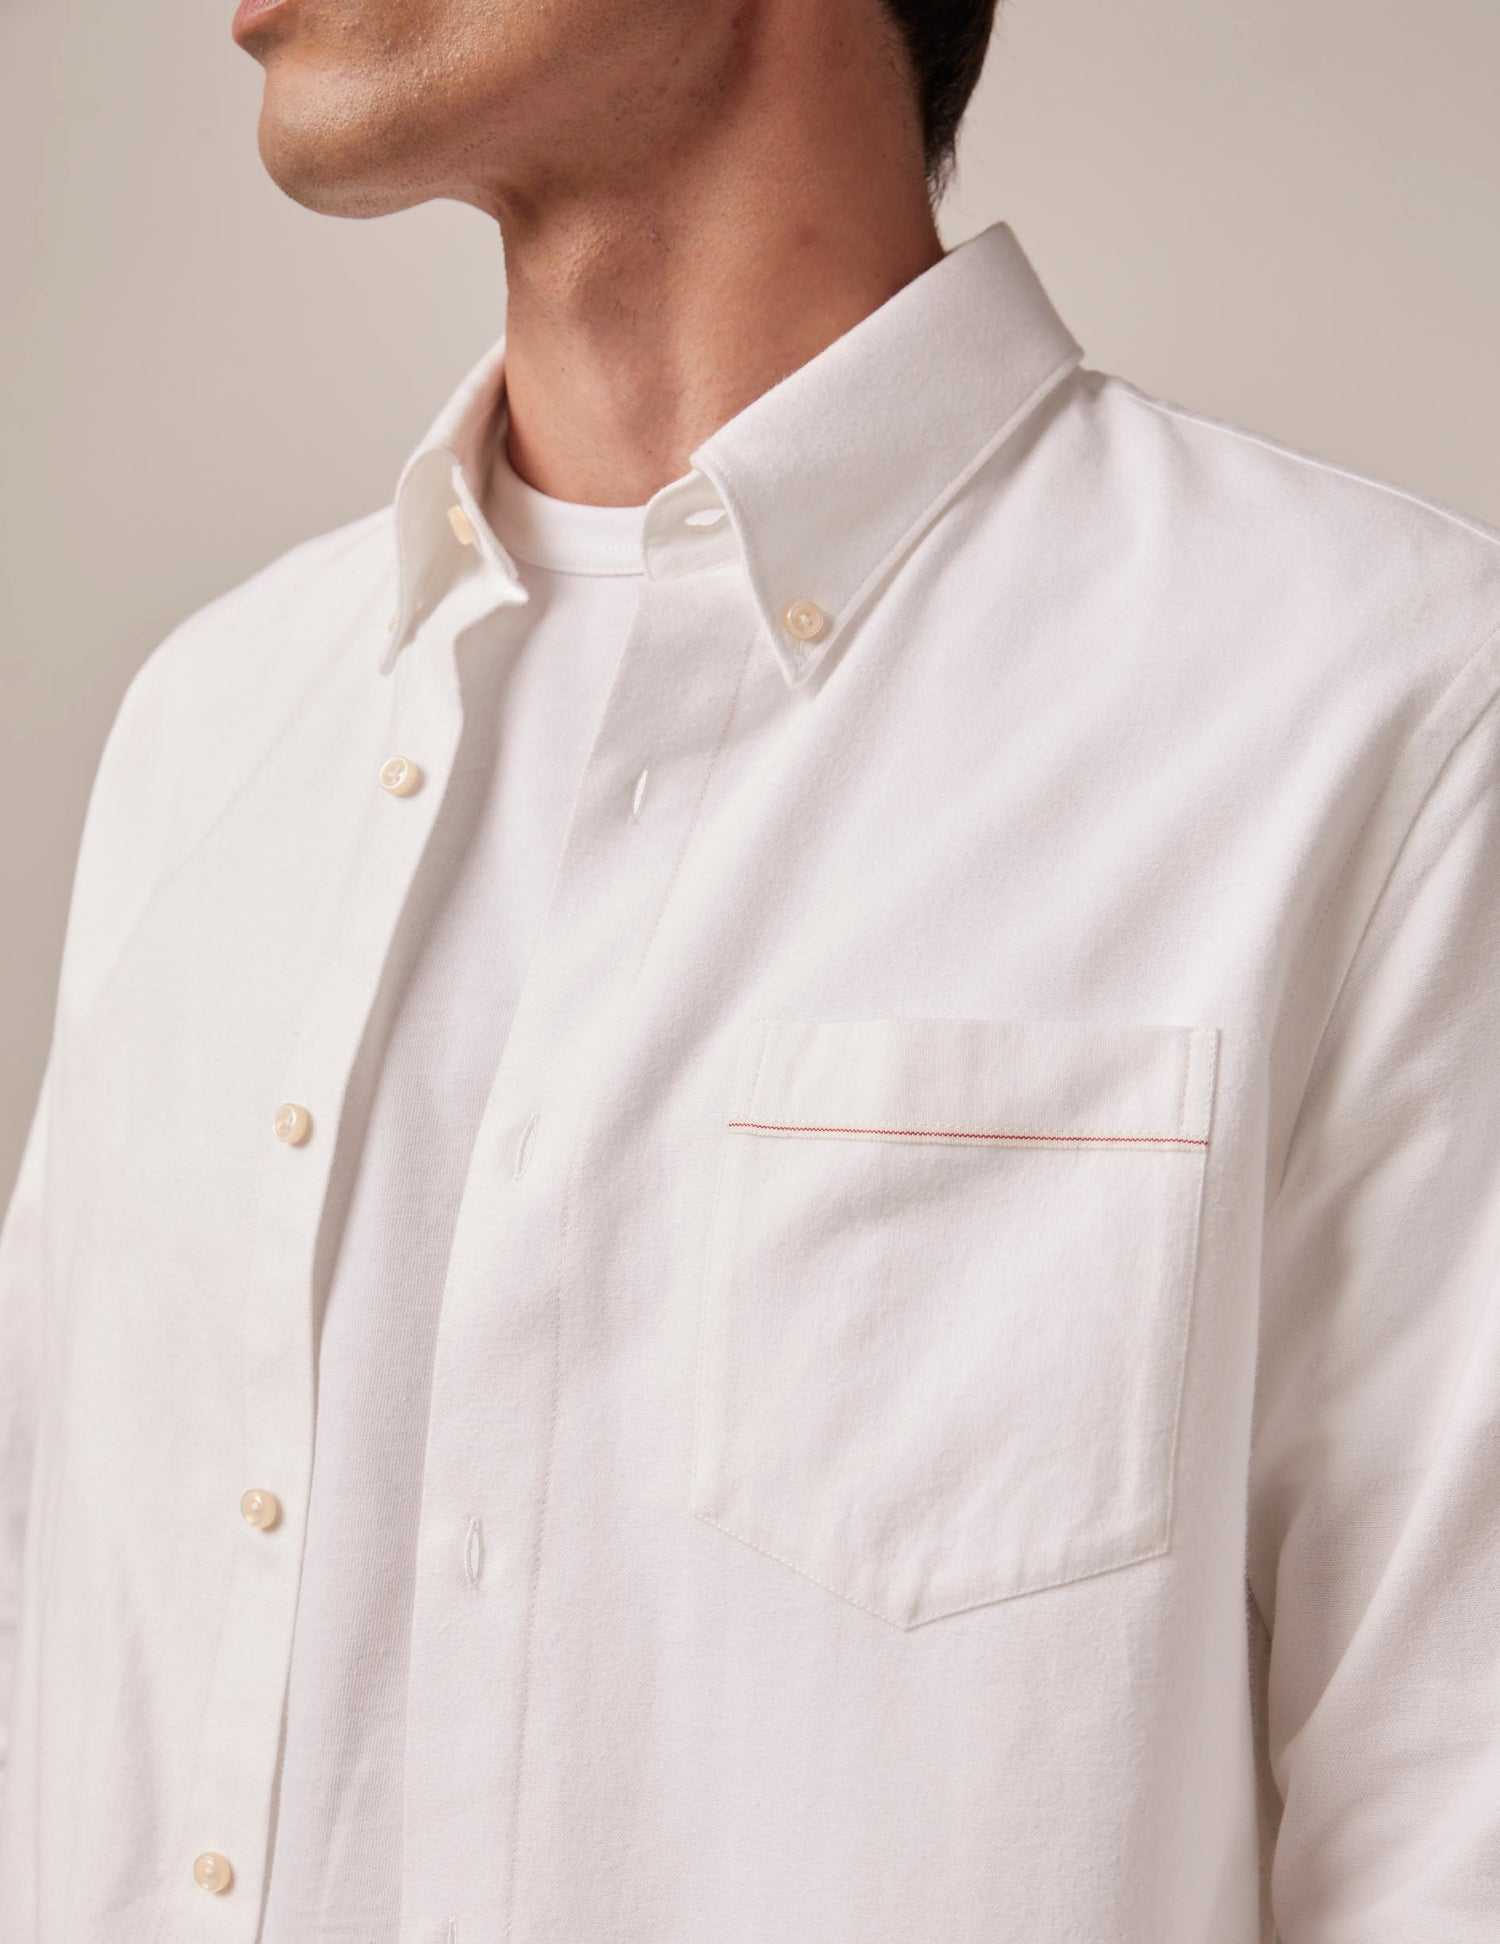 White Armand shirt - Oxford selvedge - Prodigious buttoned Collar#3